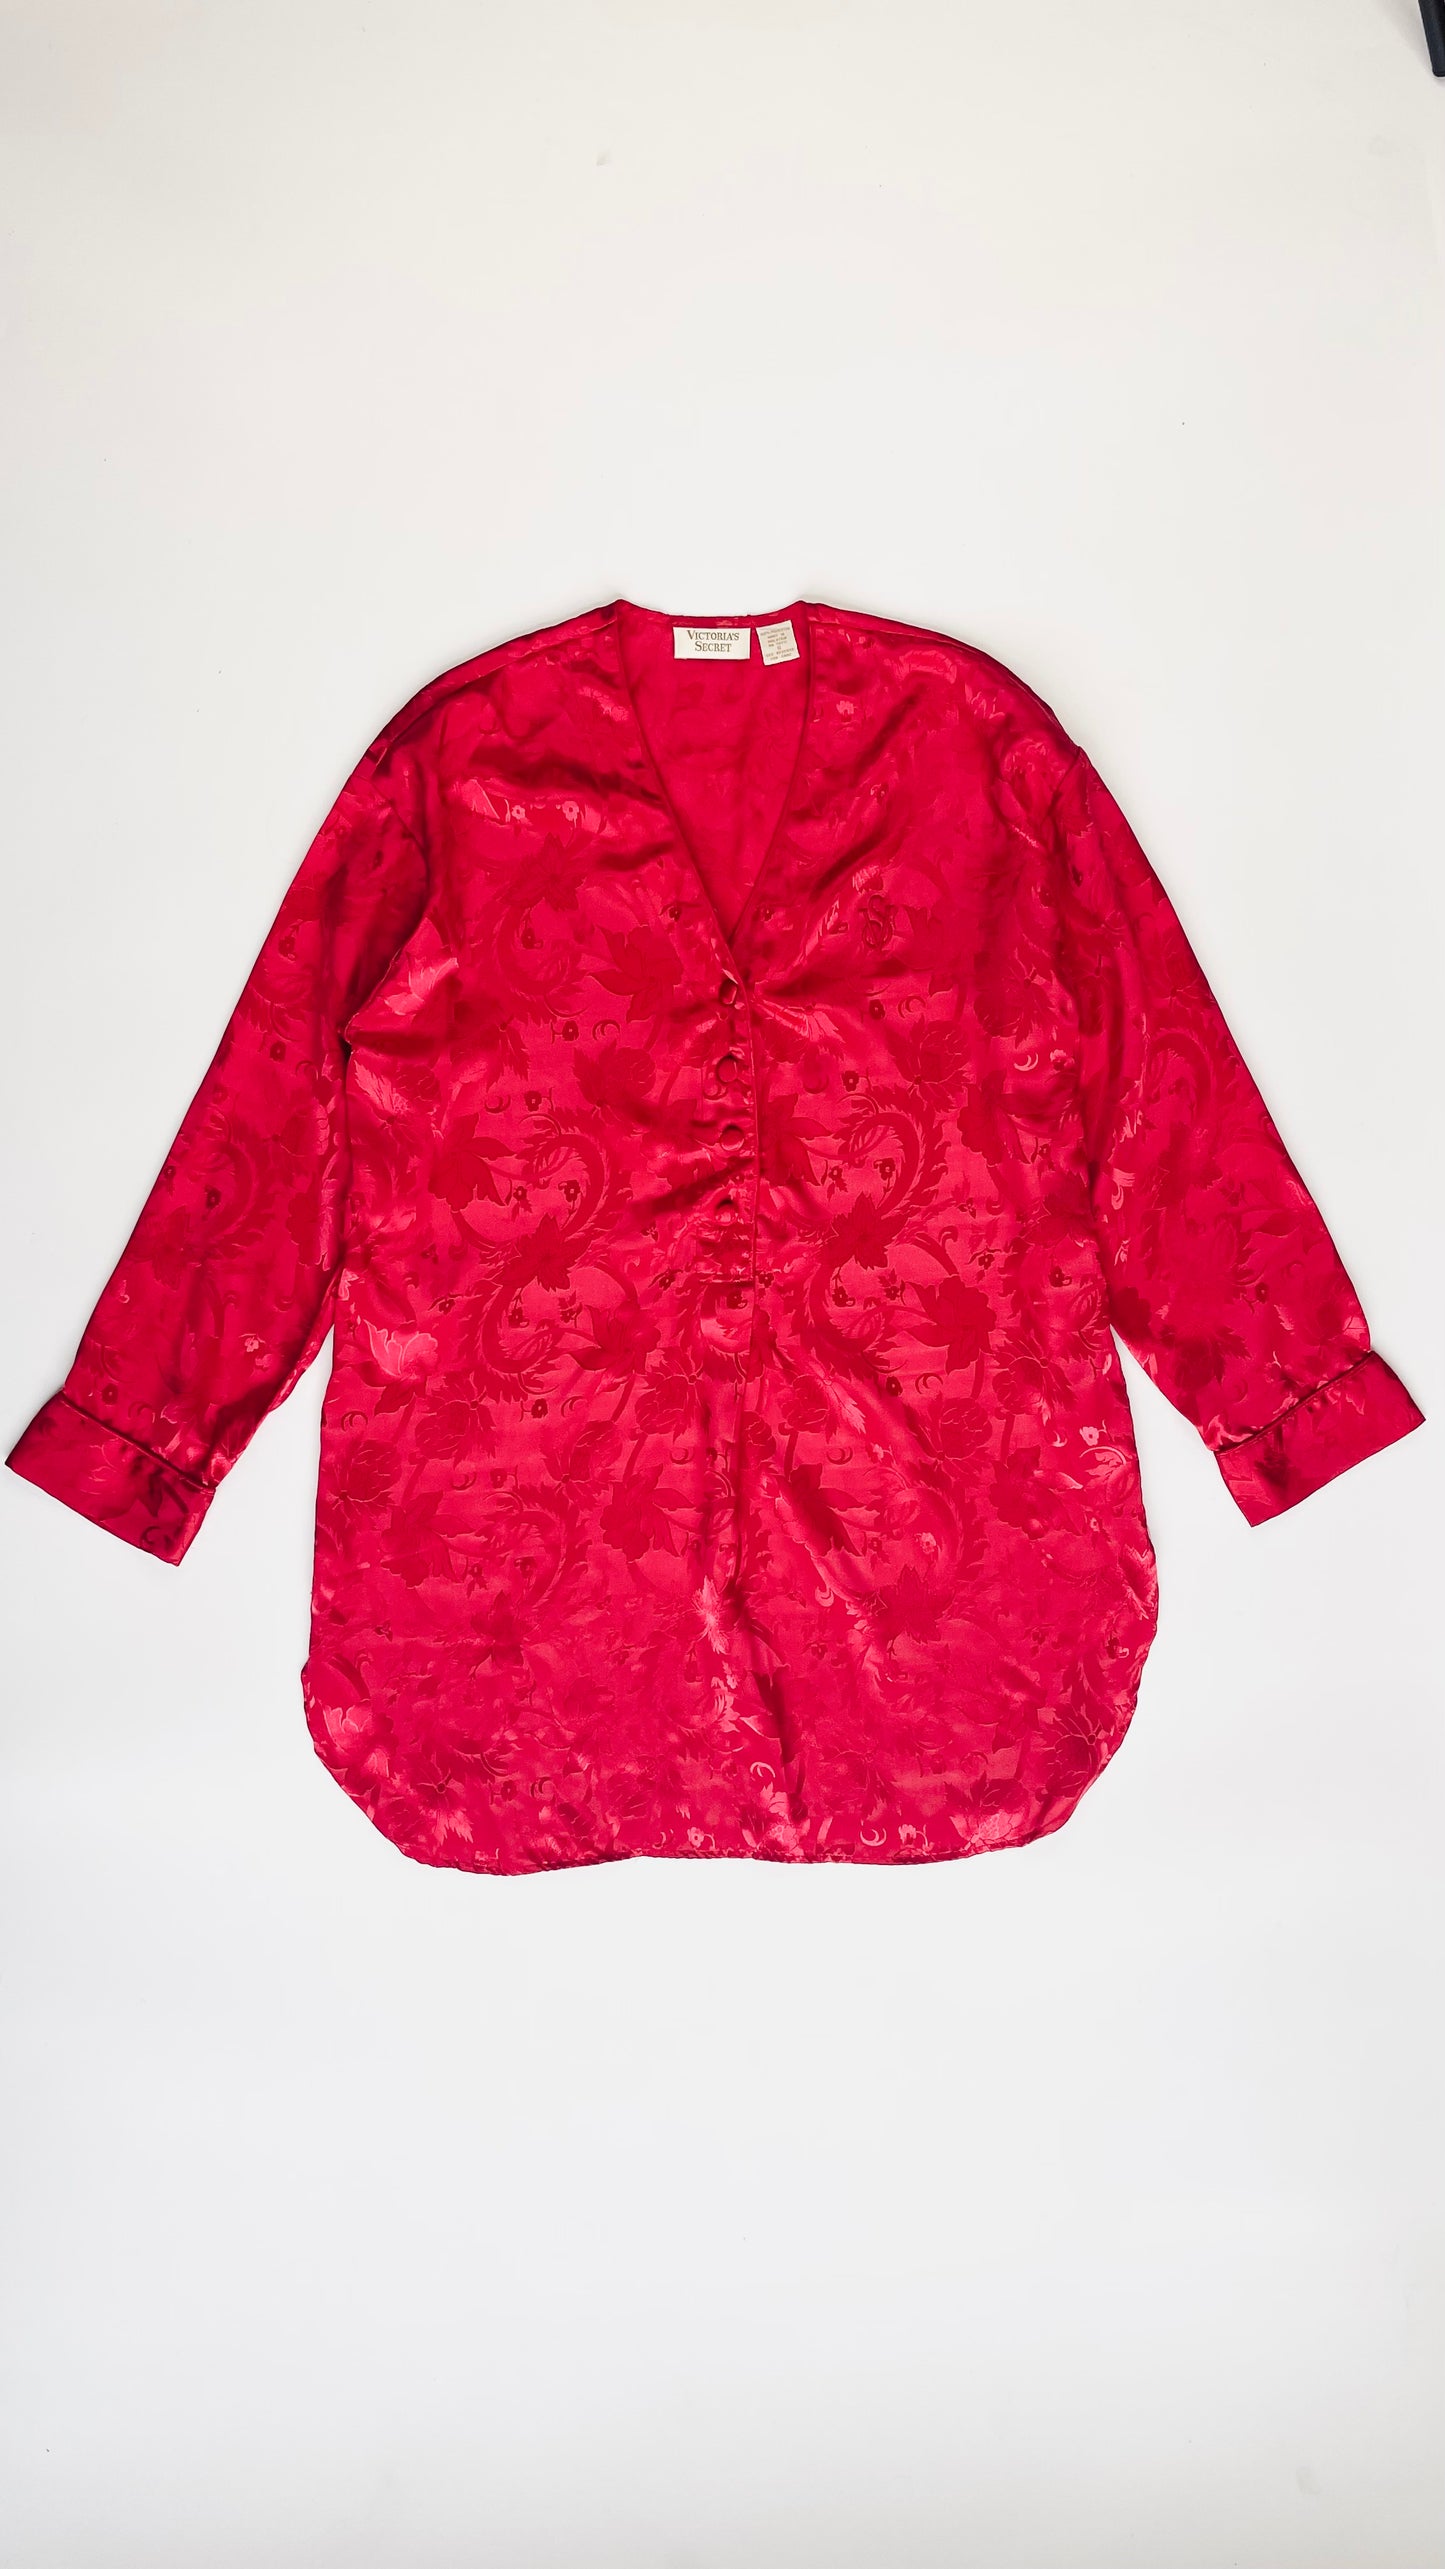 Vintage 90s Victoria's Secret red satin floral print sleep shirt - Size S